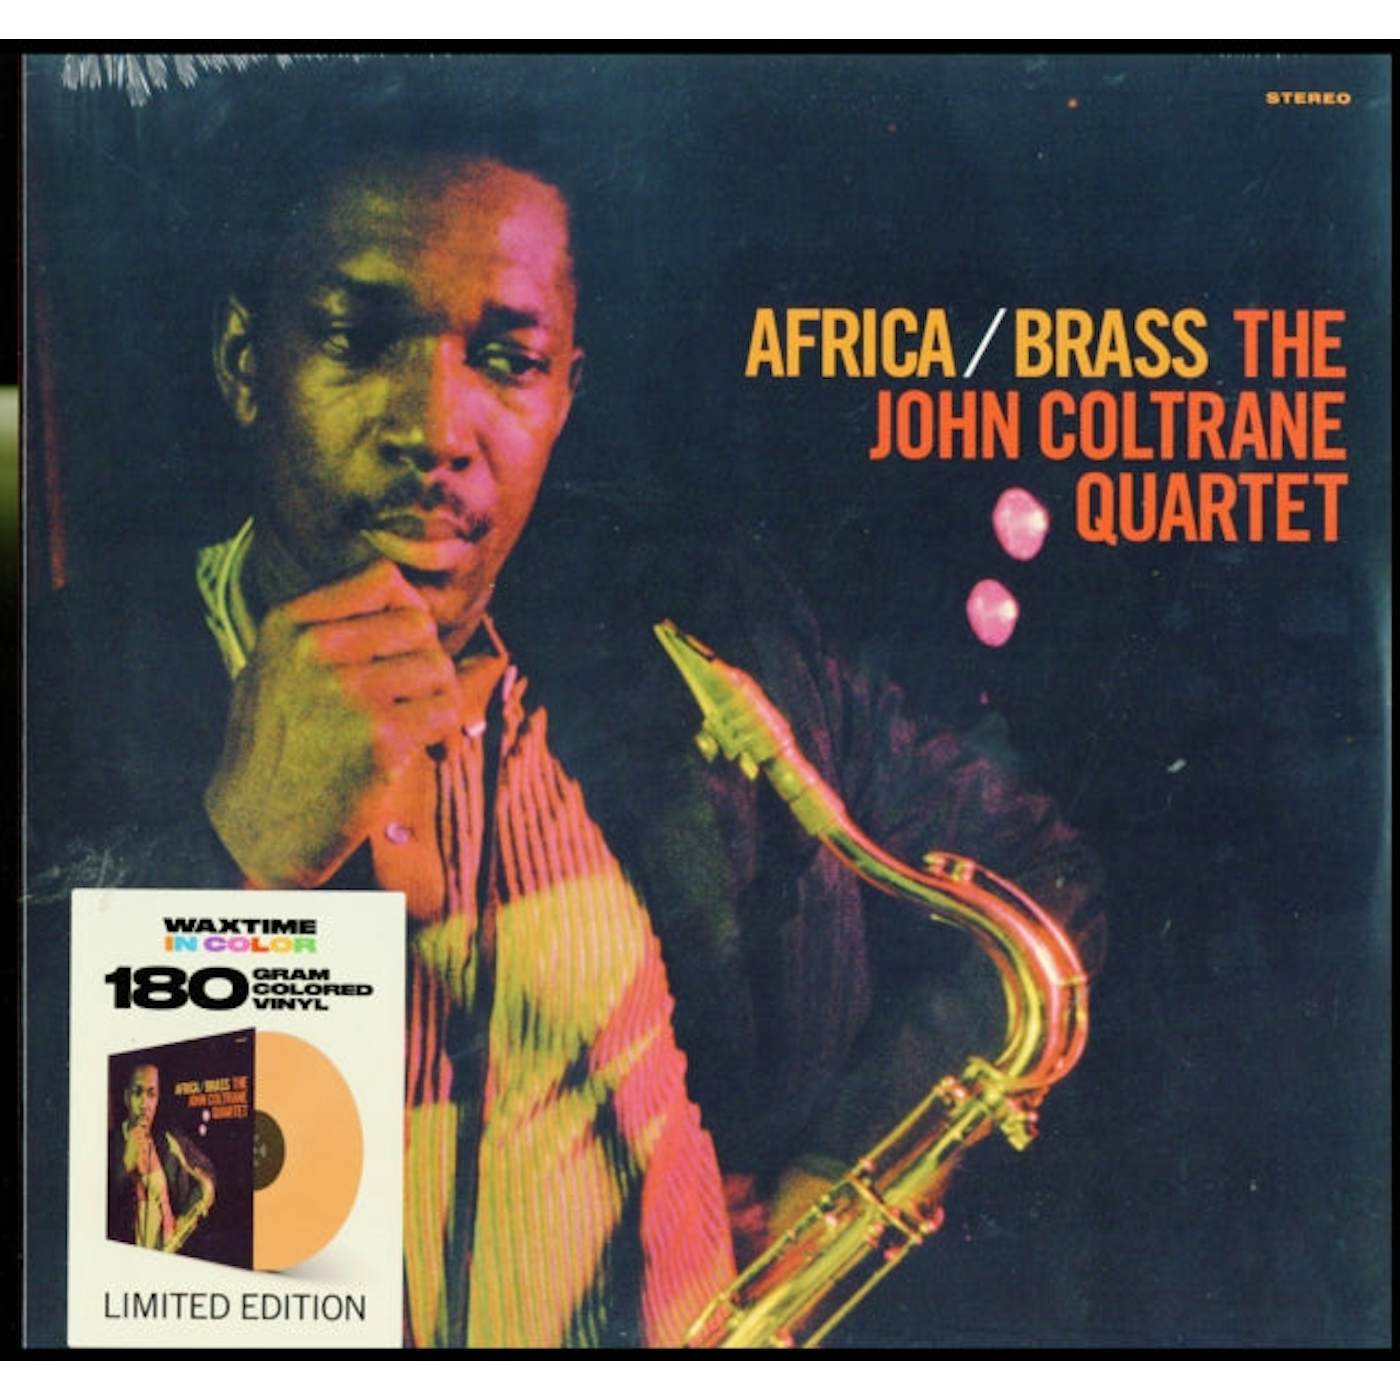 John Coltrane Quartet LP Vinyl Record - Africa / Brass (Solid Orange Vinyl)